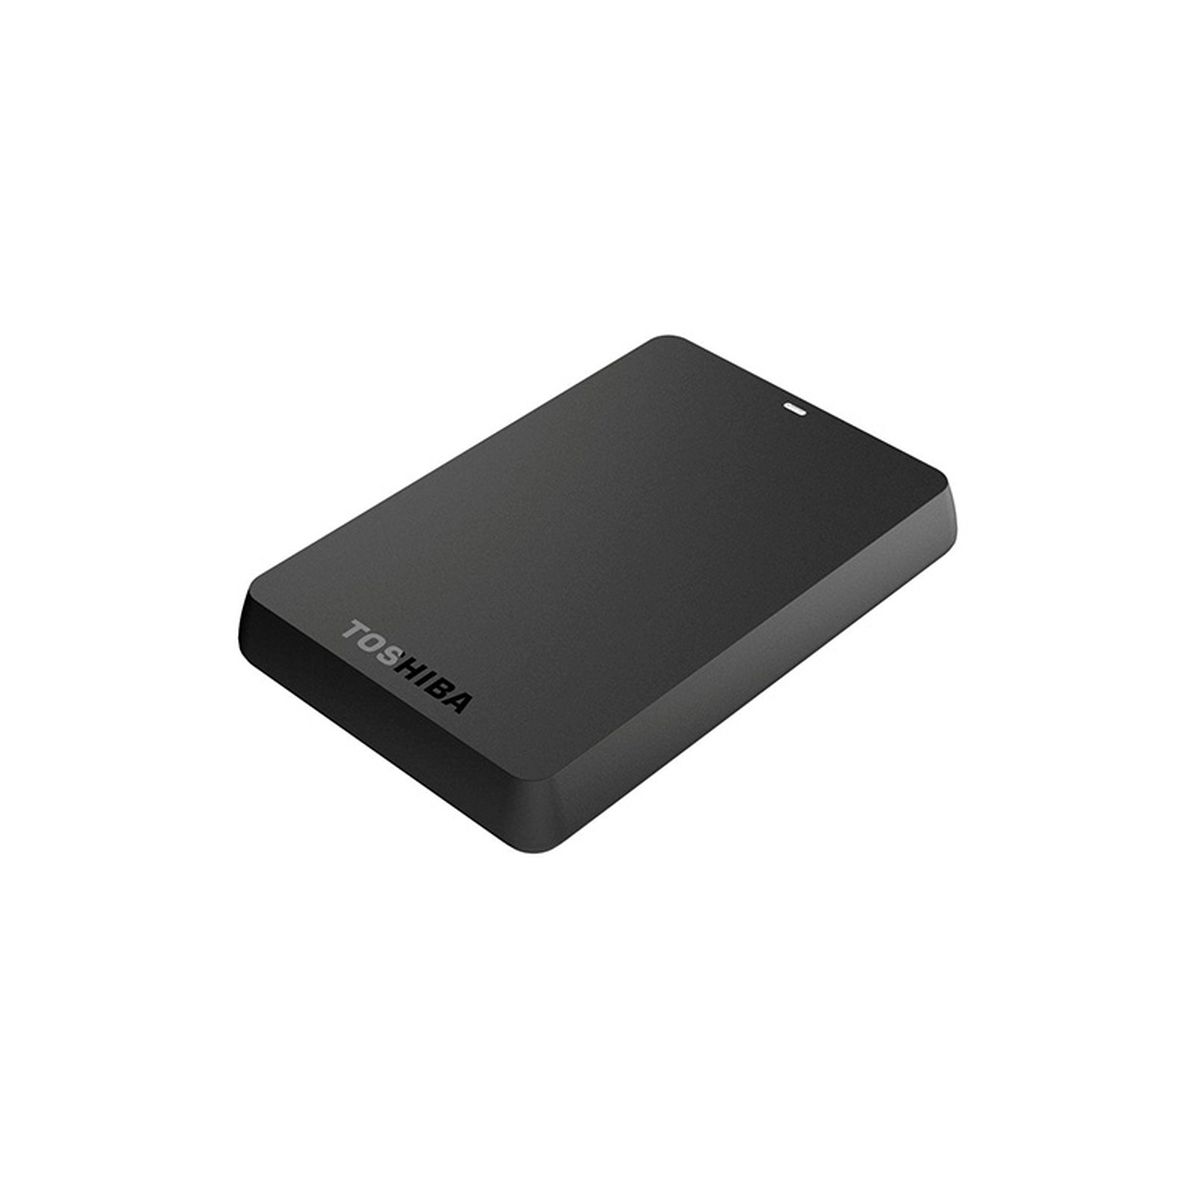 HD Externo 4TB Portátil Toshiba Canvio Basics - USB 3.0 - HDTB440XK3CA